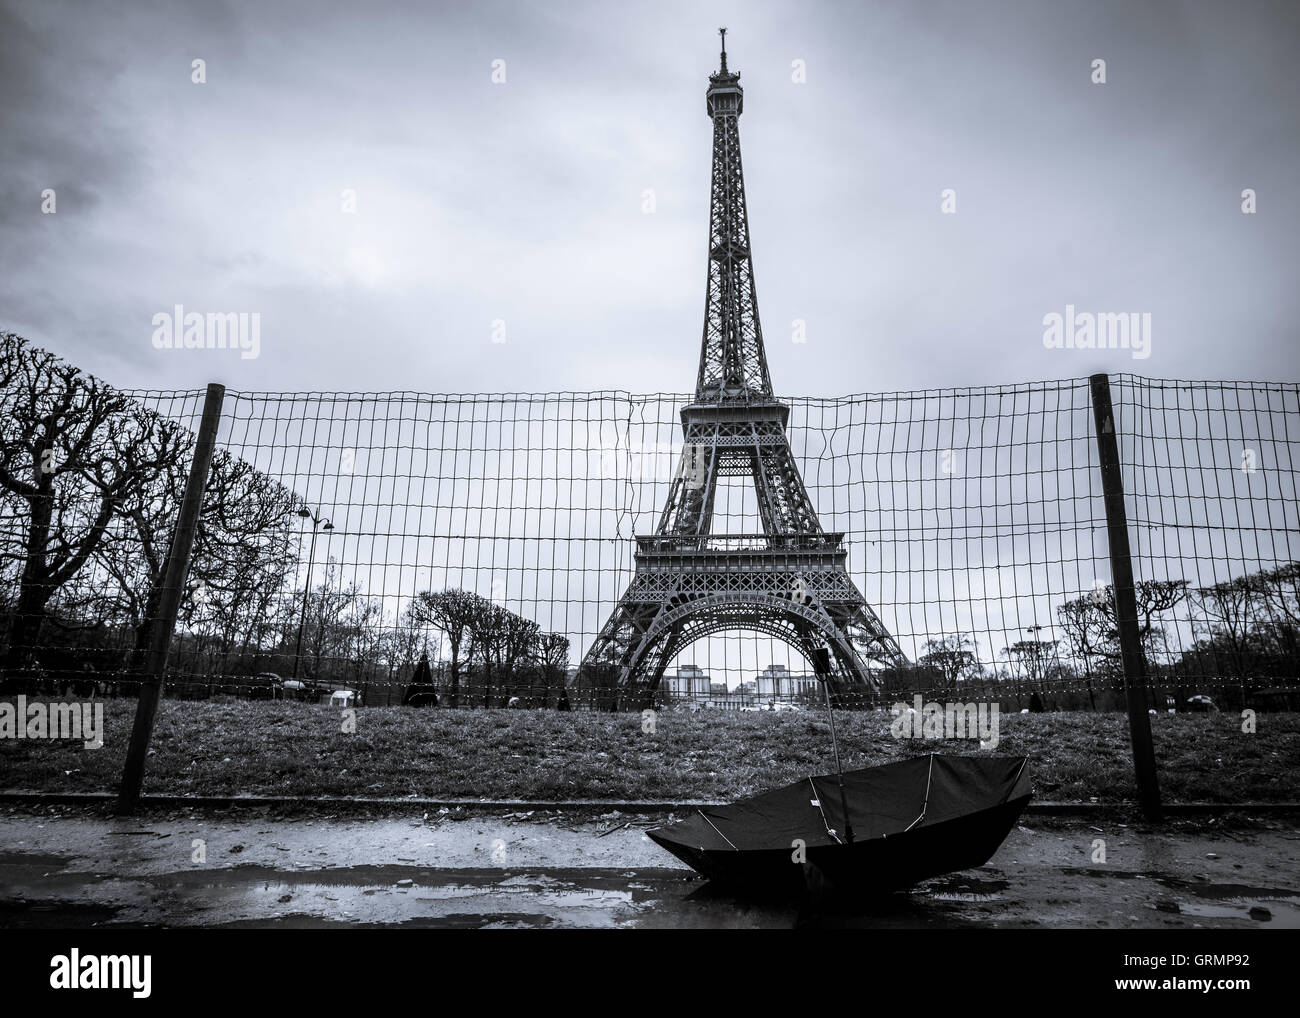 Eiffel tower and umbrella on a rainy day Stock Photo